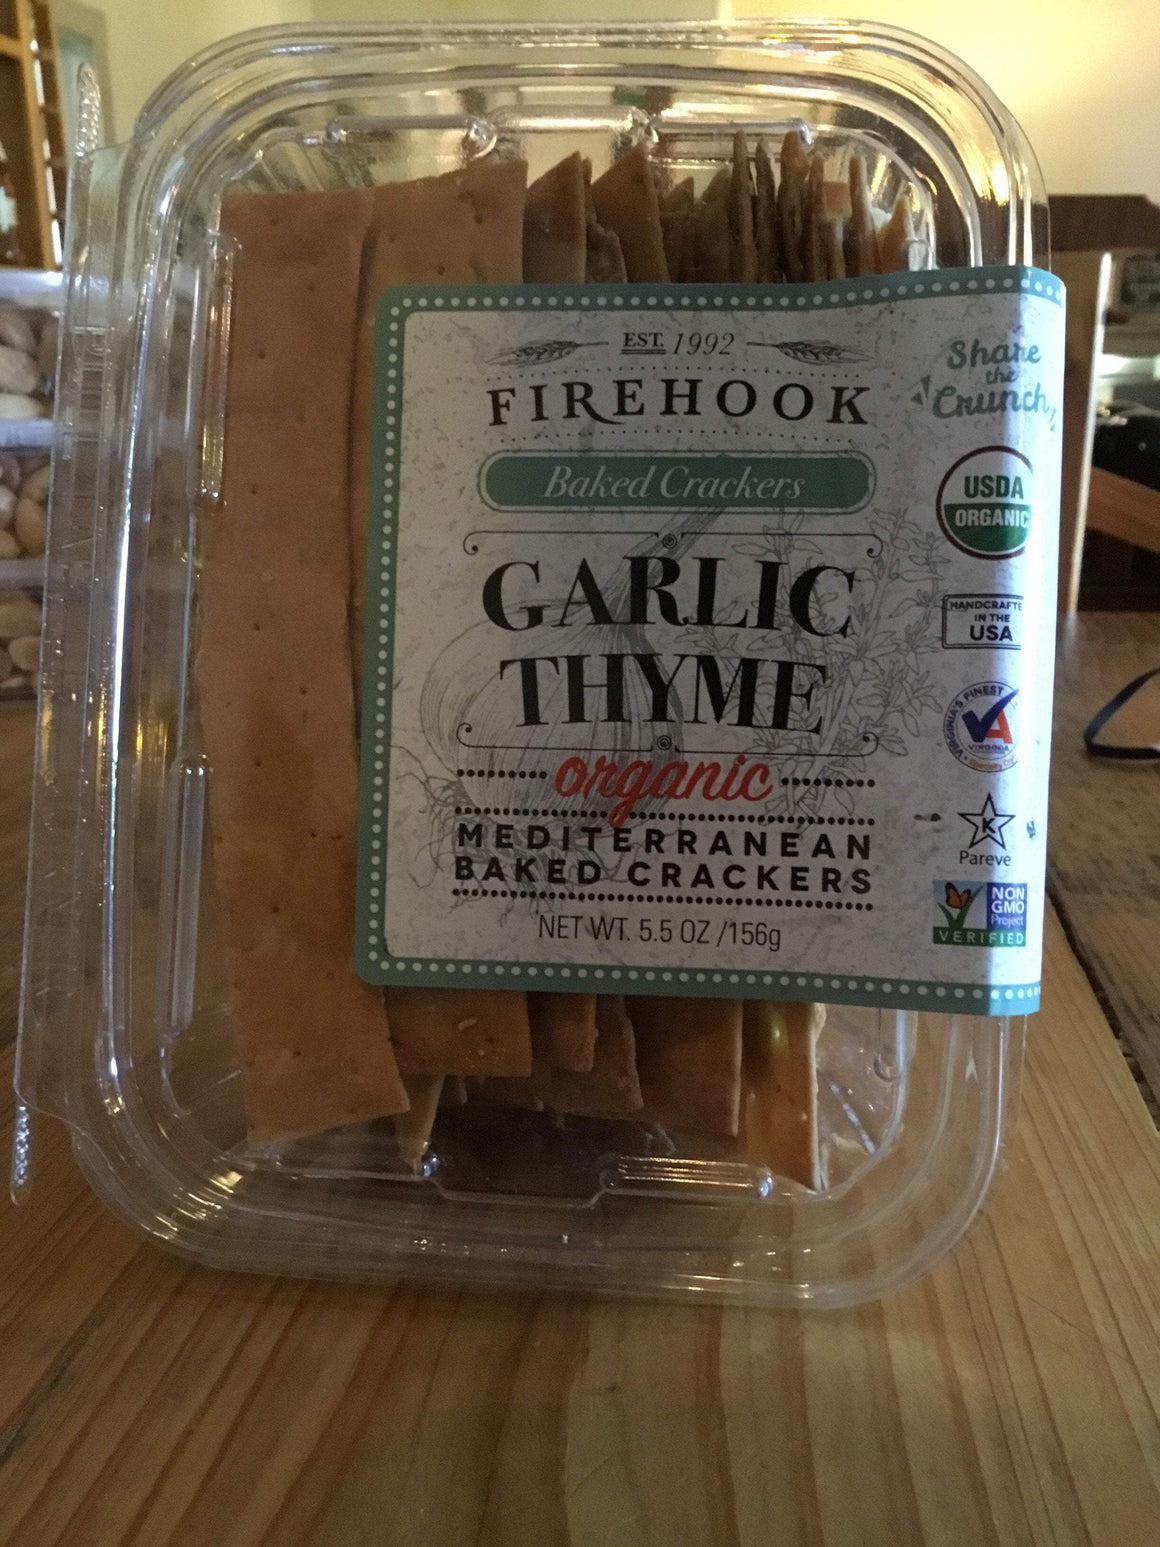 Firehook Garlic & Thyme Baked Crackers